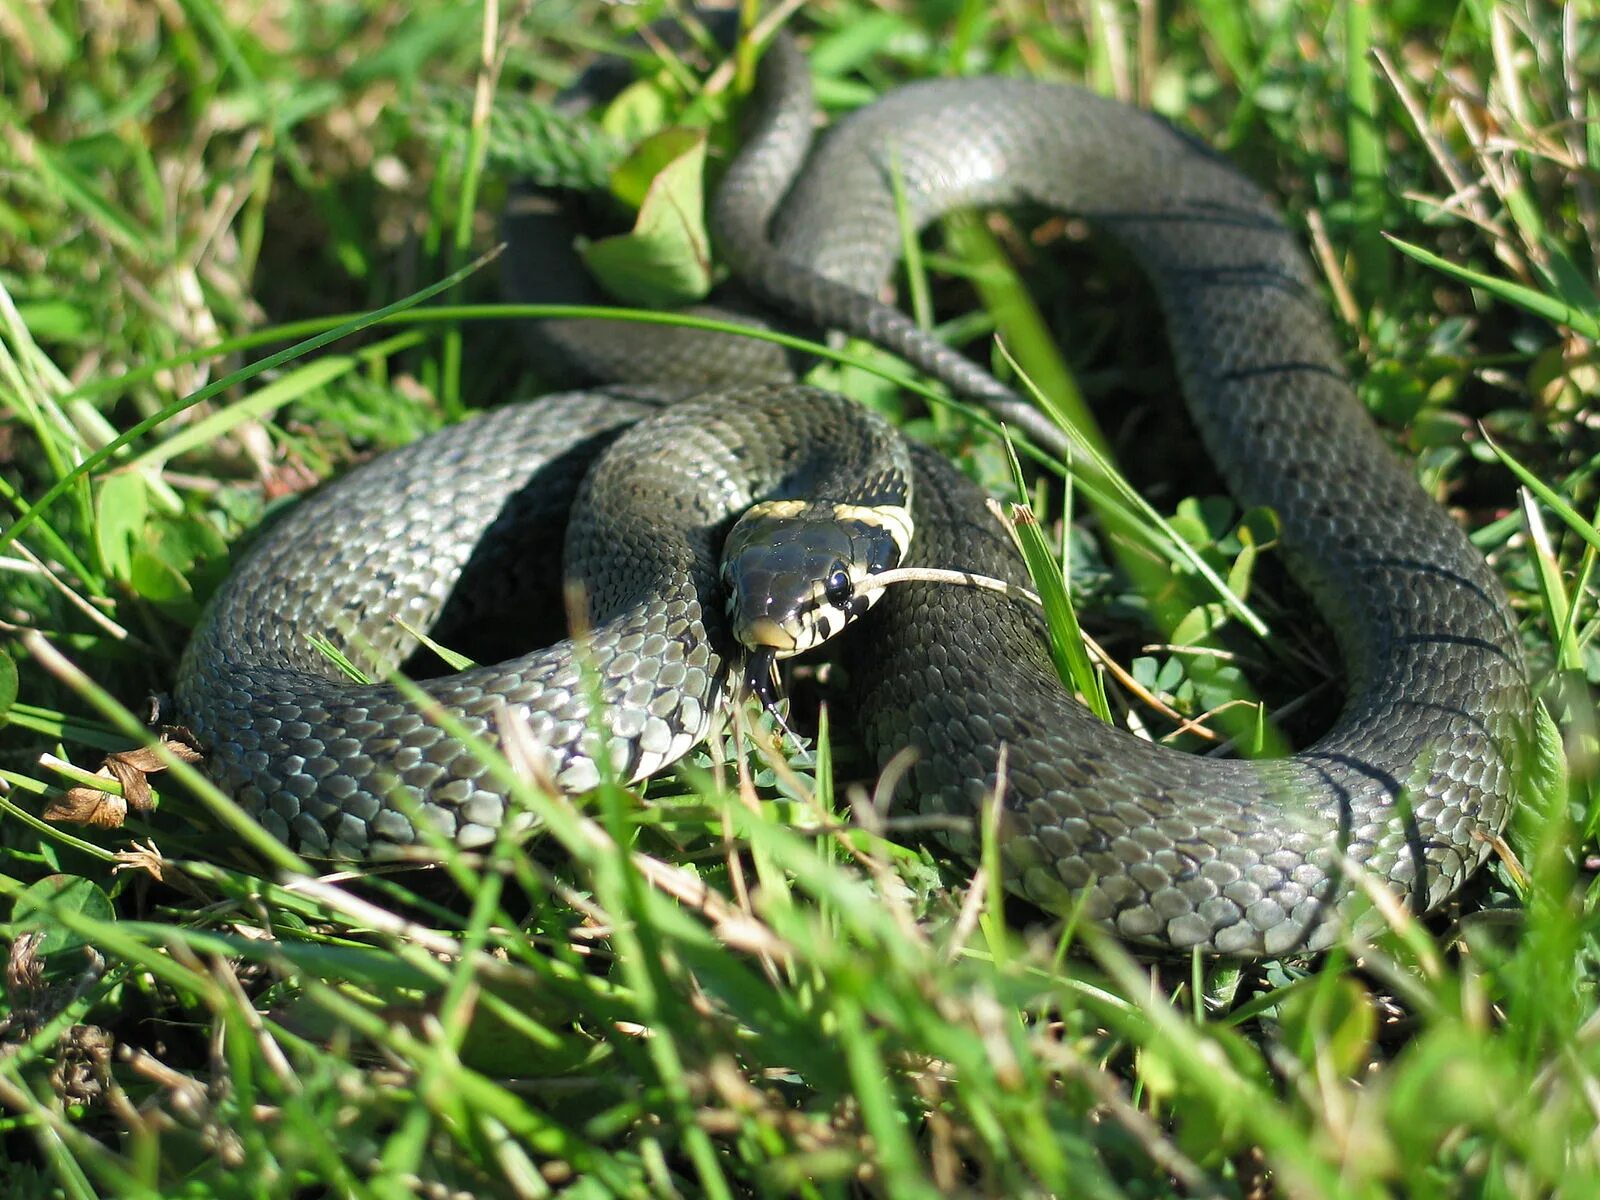 Grass snake. Обыкновенный уж Natrix Natrix. Змея Натрикс Натрикс. Змея уж обыкновенный. Уж обыкновенный - змея неядовитая.